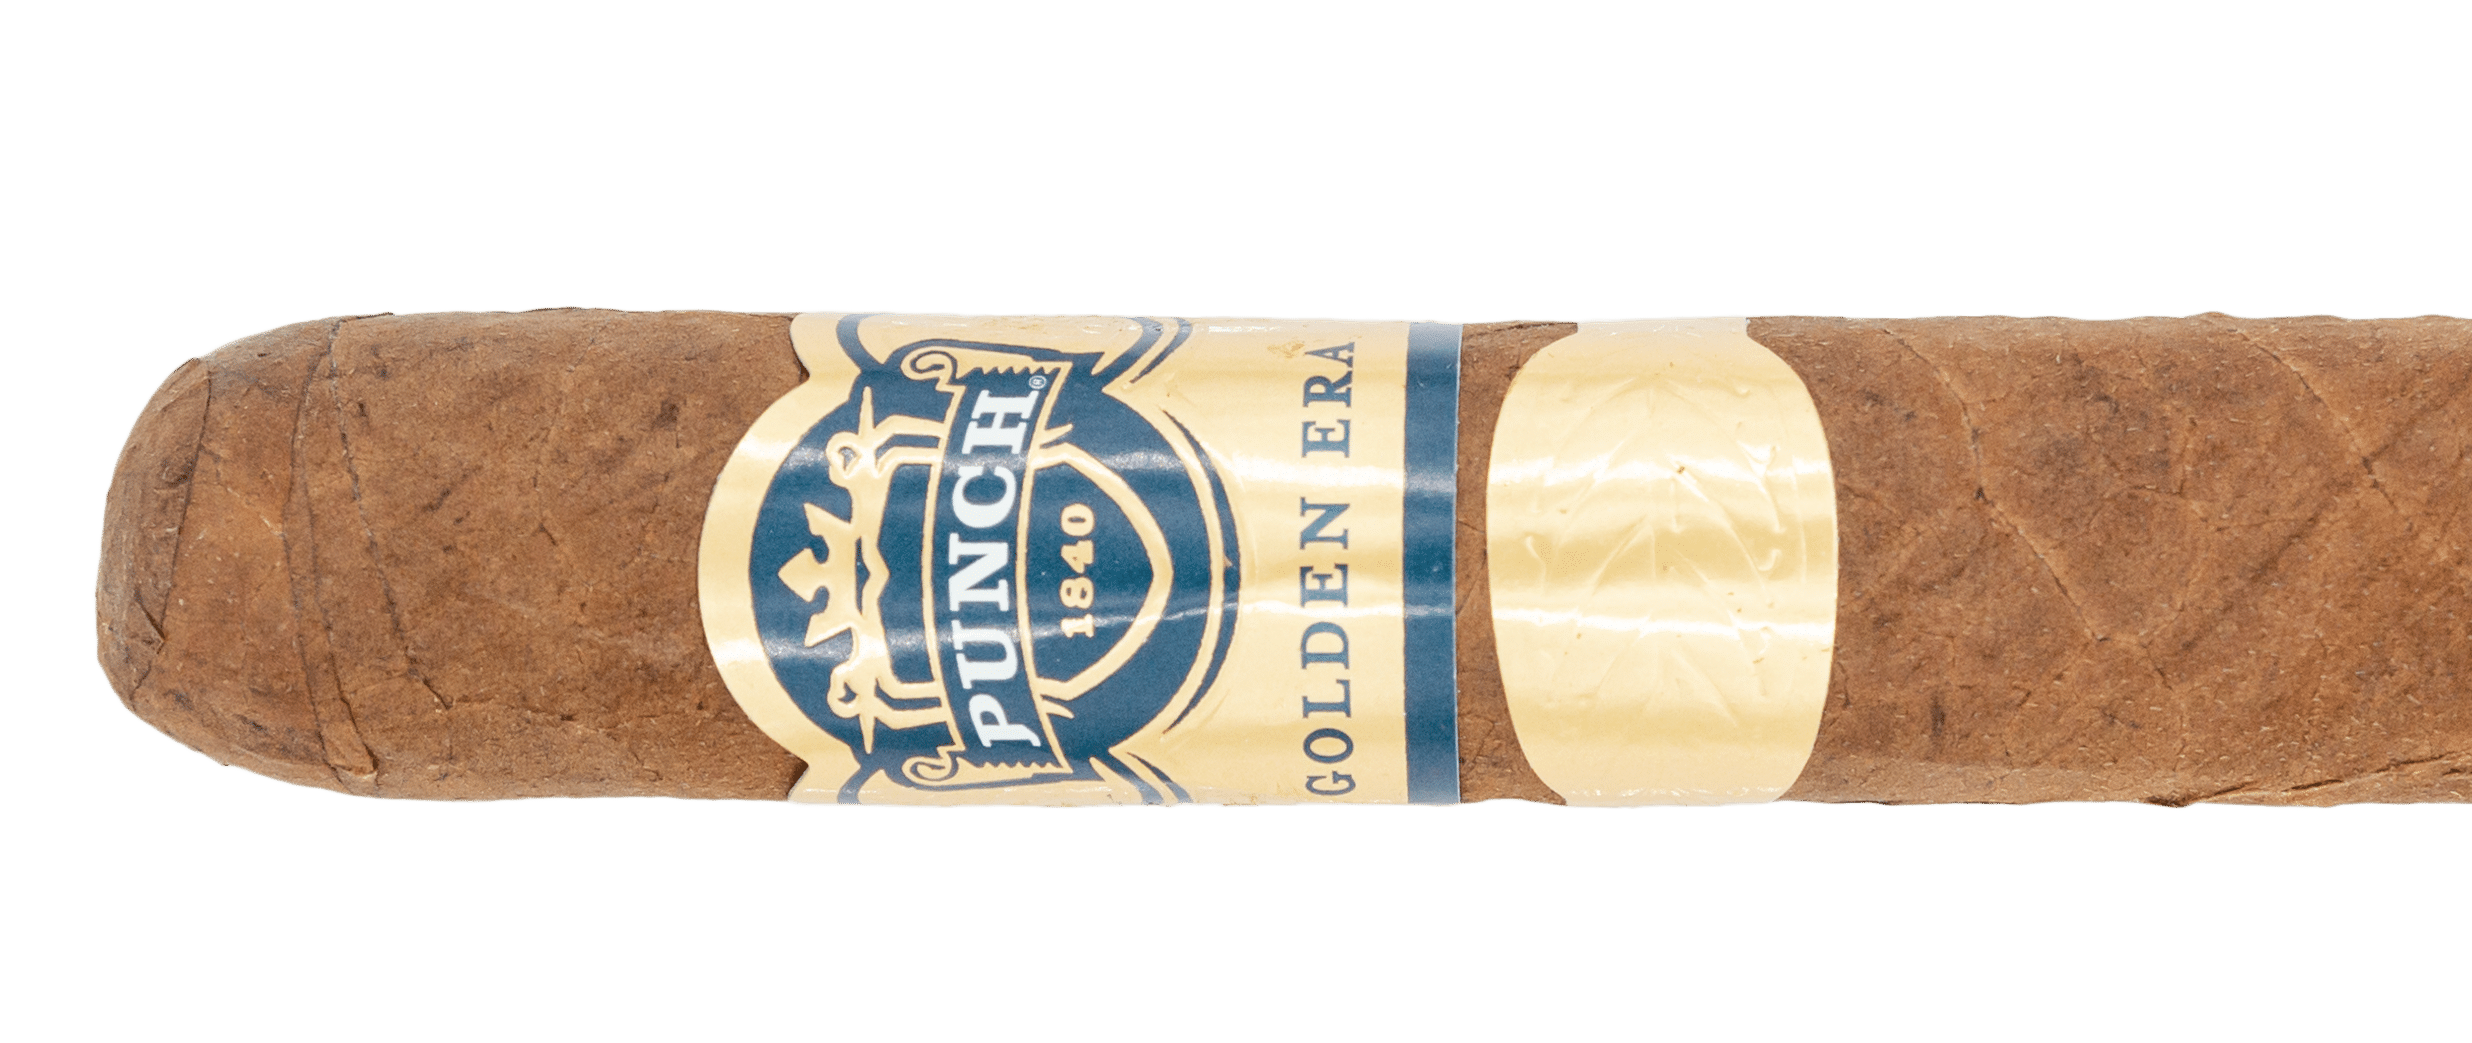 Punch Golden Era Robusto - Blind Cigar Review